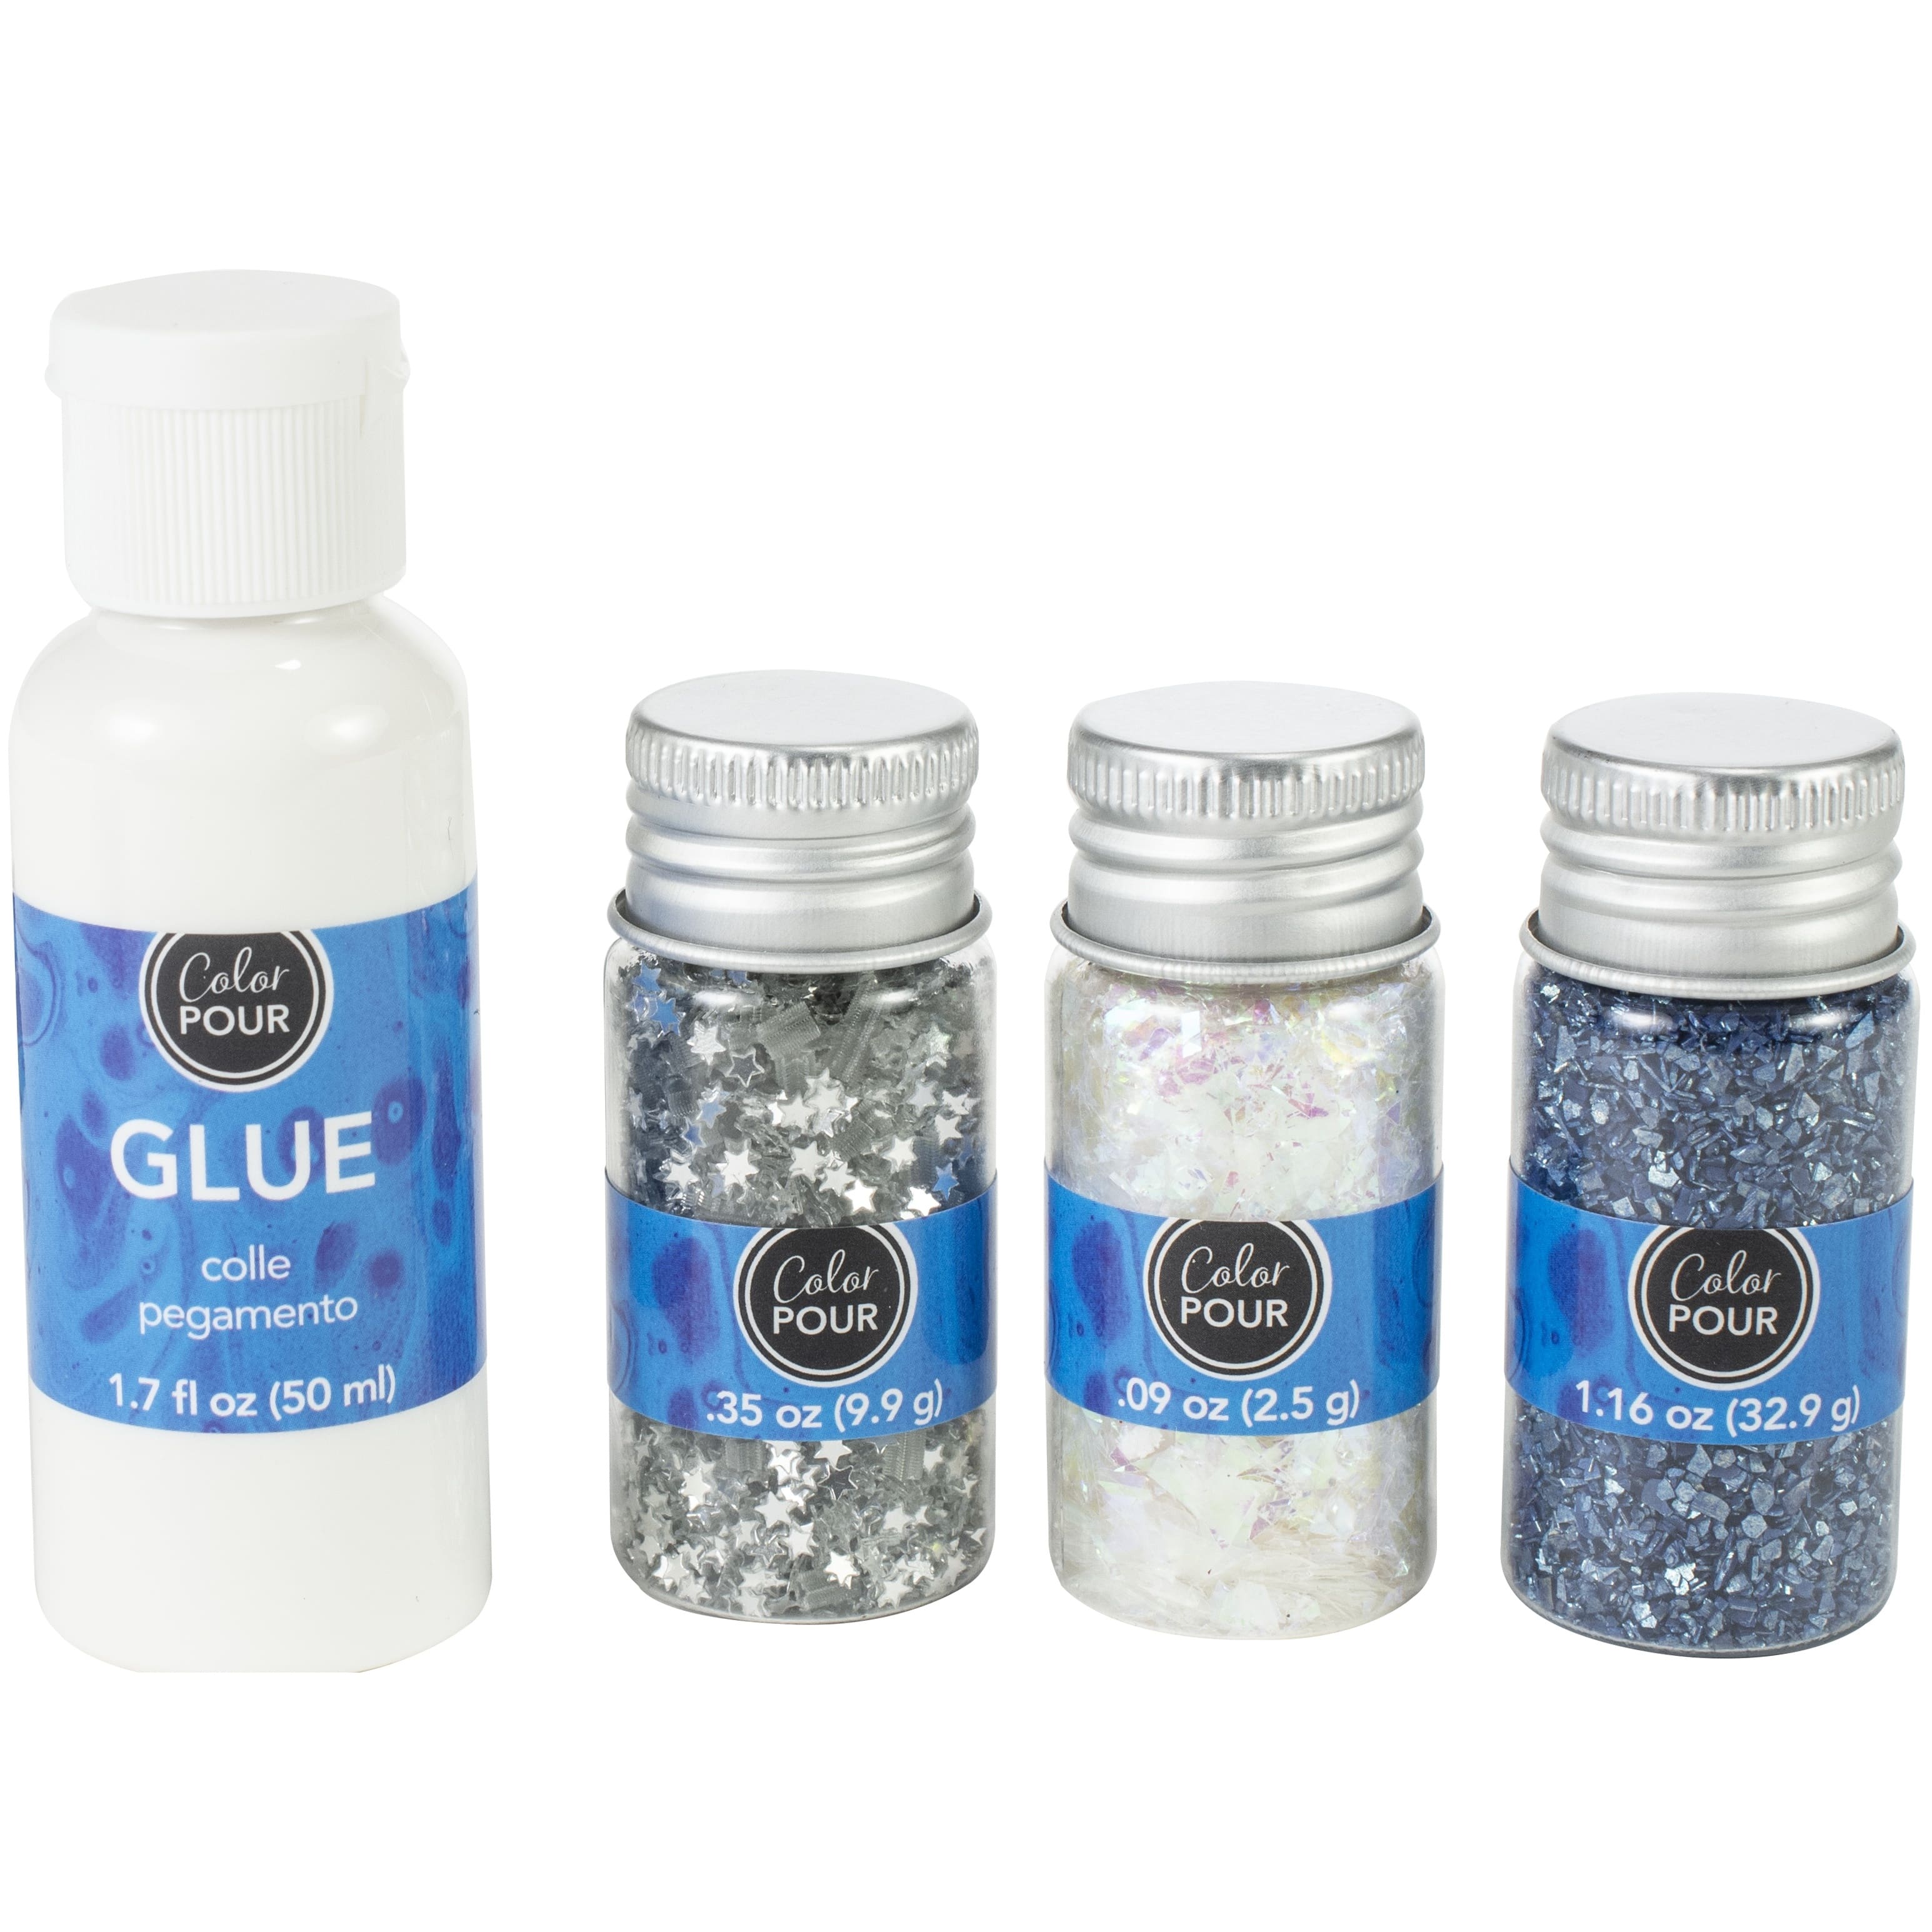 Color Pour Galaxy Surge Glitter Pouring Paint Mix-In Kit